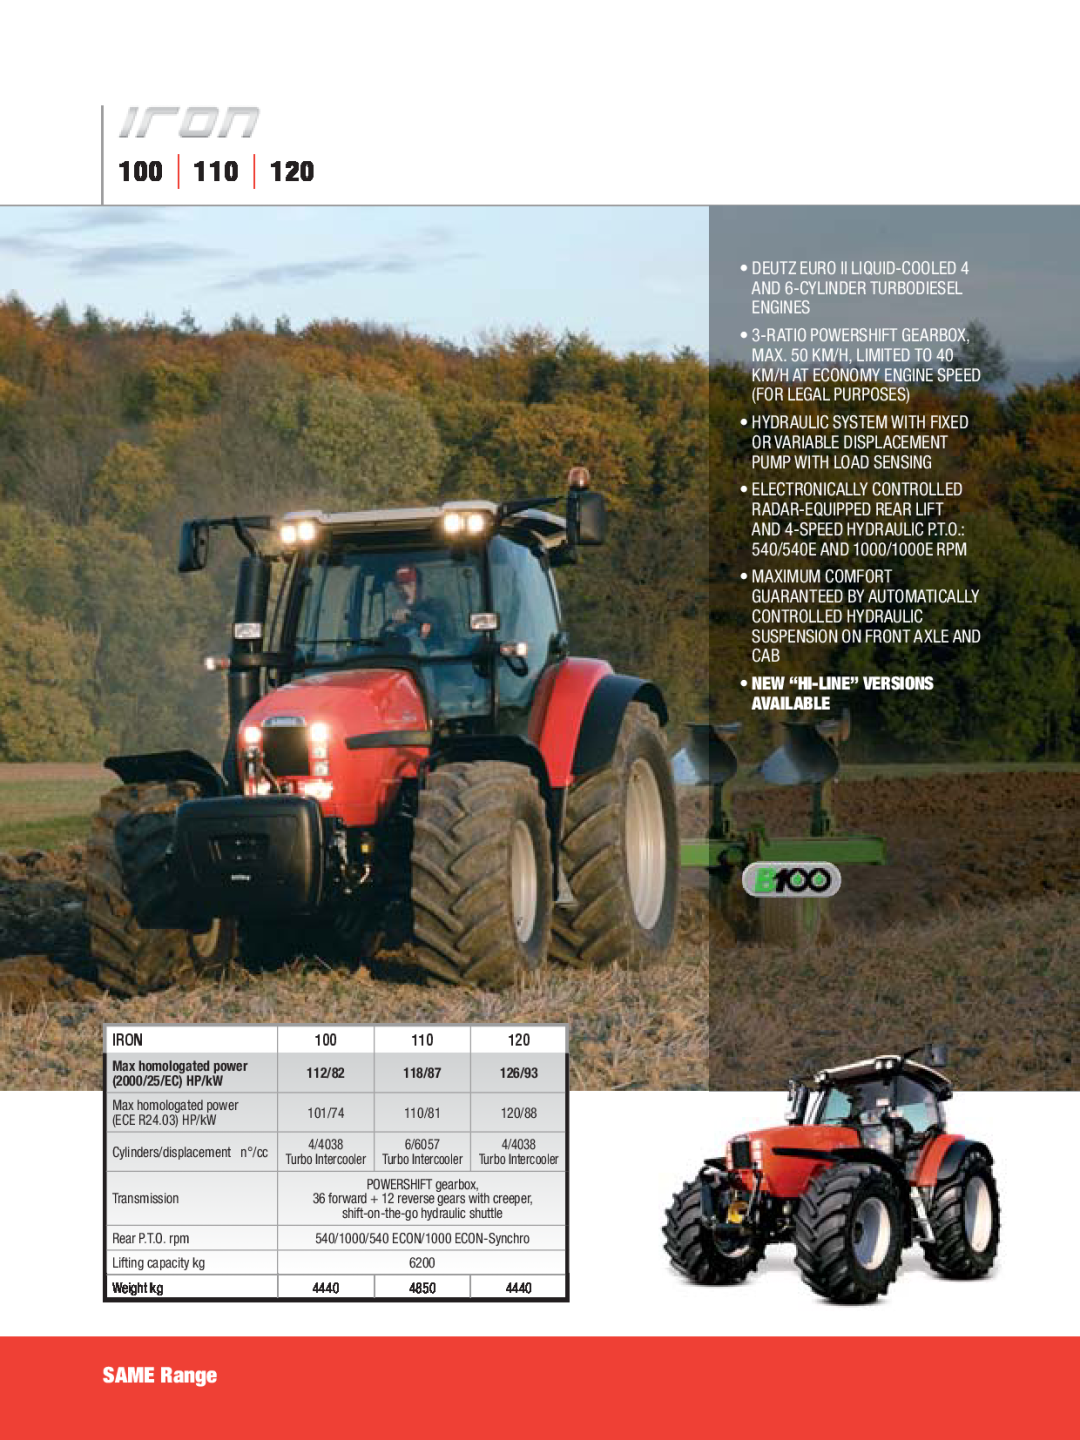 SAME Tractors manual SAME Range, Iron, New “Hi-Line”Versions Available 